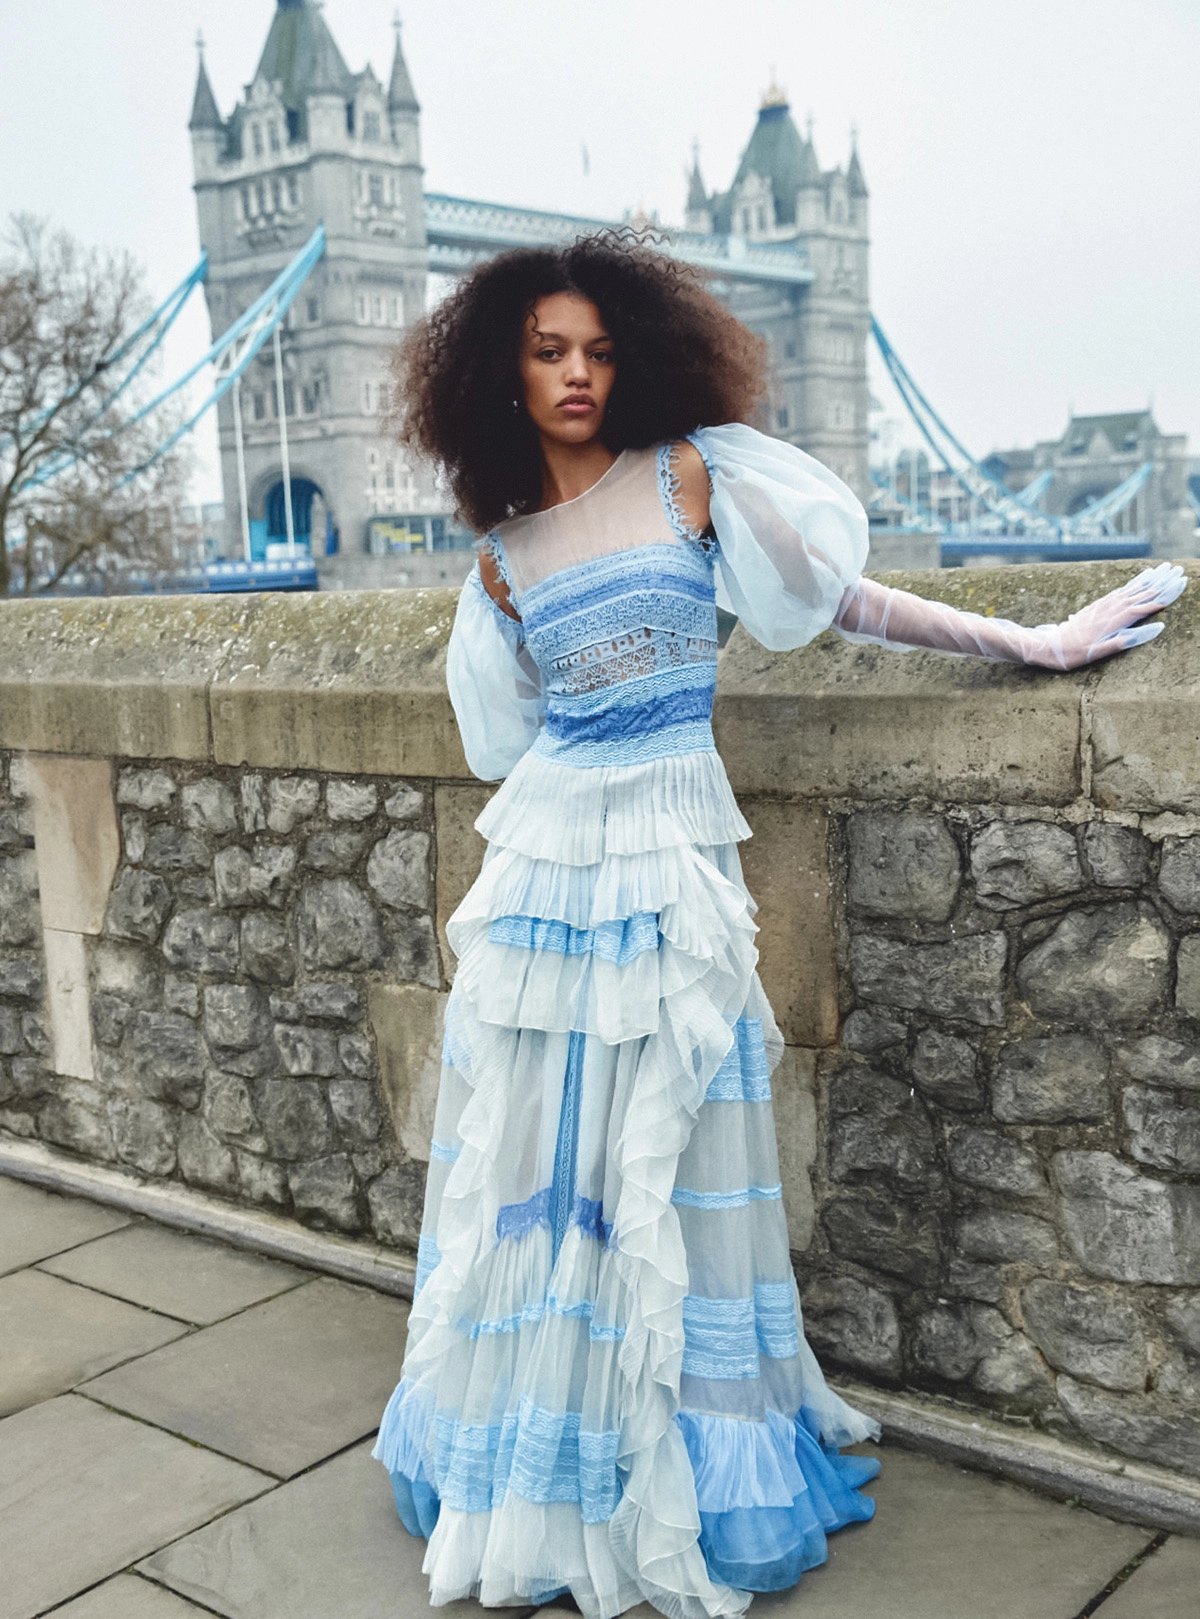 Kukua Williams covers Harper’s Bazaar UK June 2022 Digital Edition by Richard Phibbs